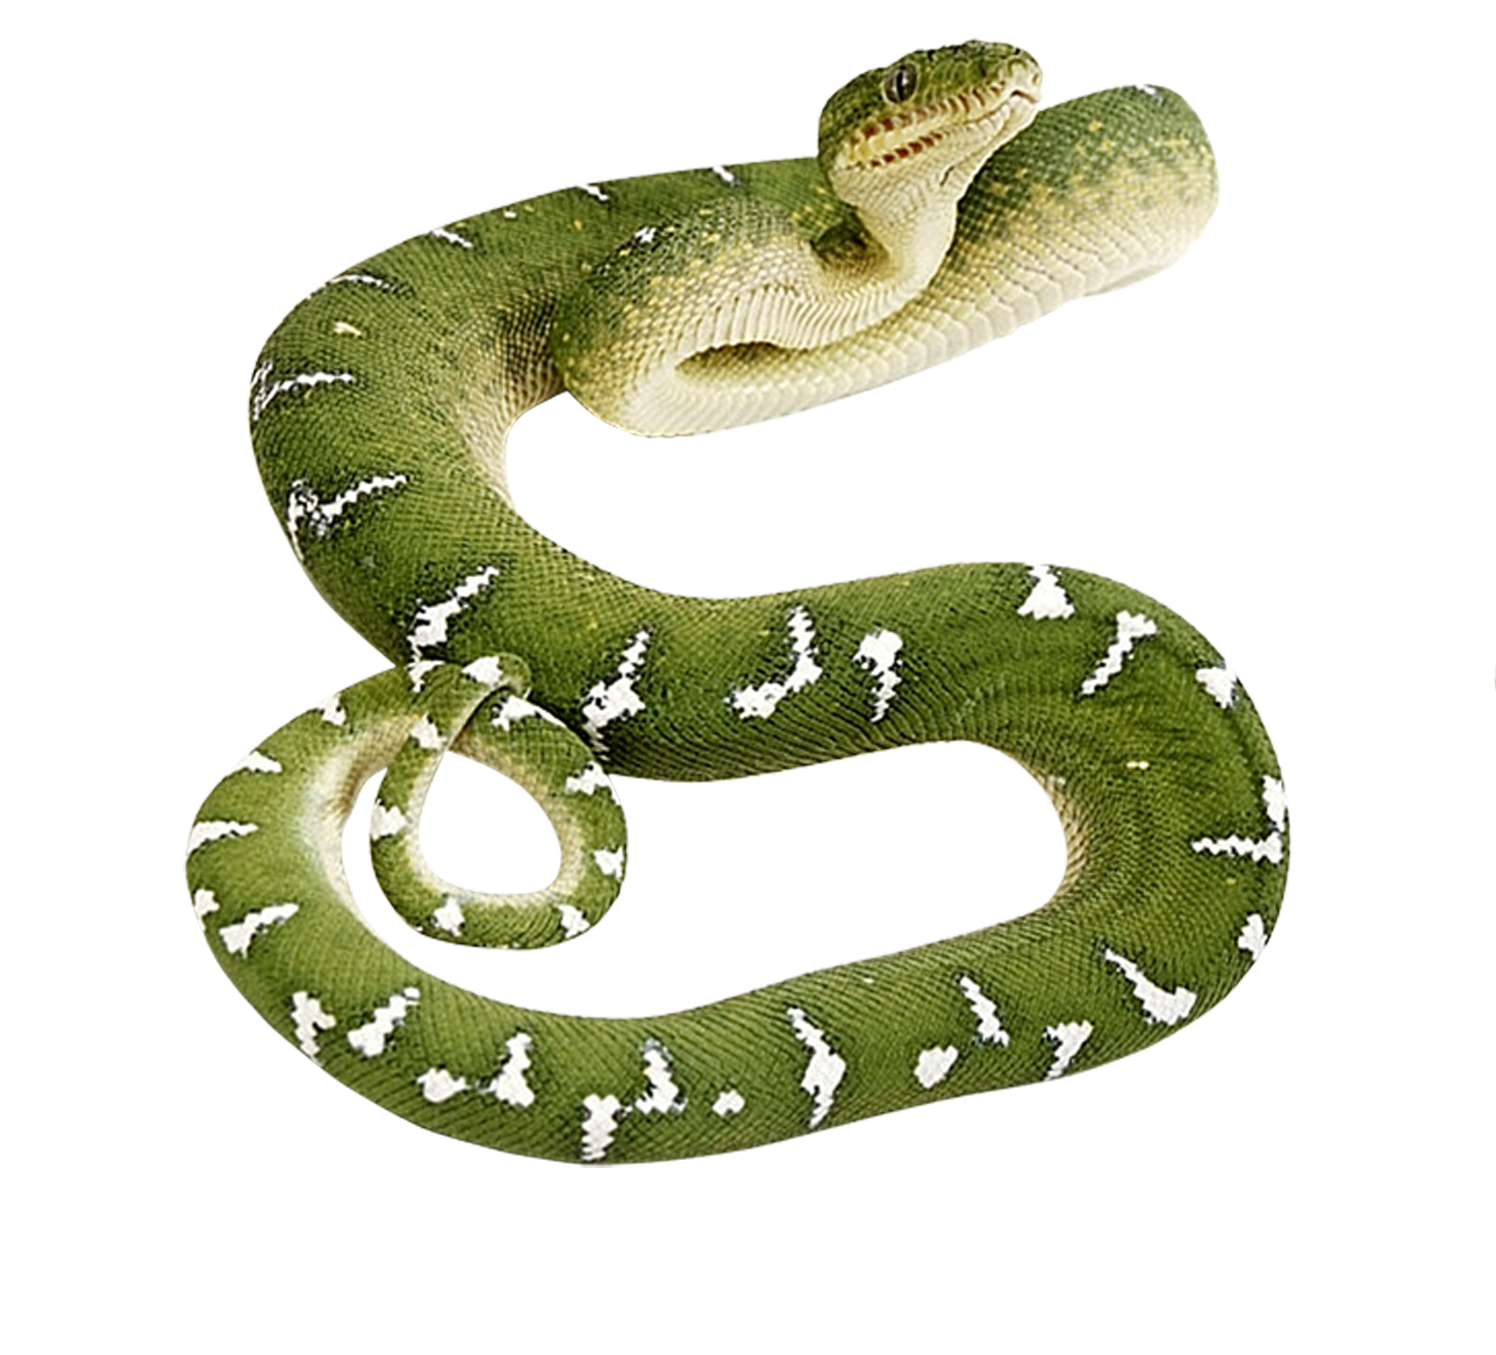 녹색 뱀